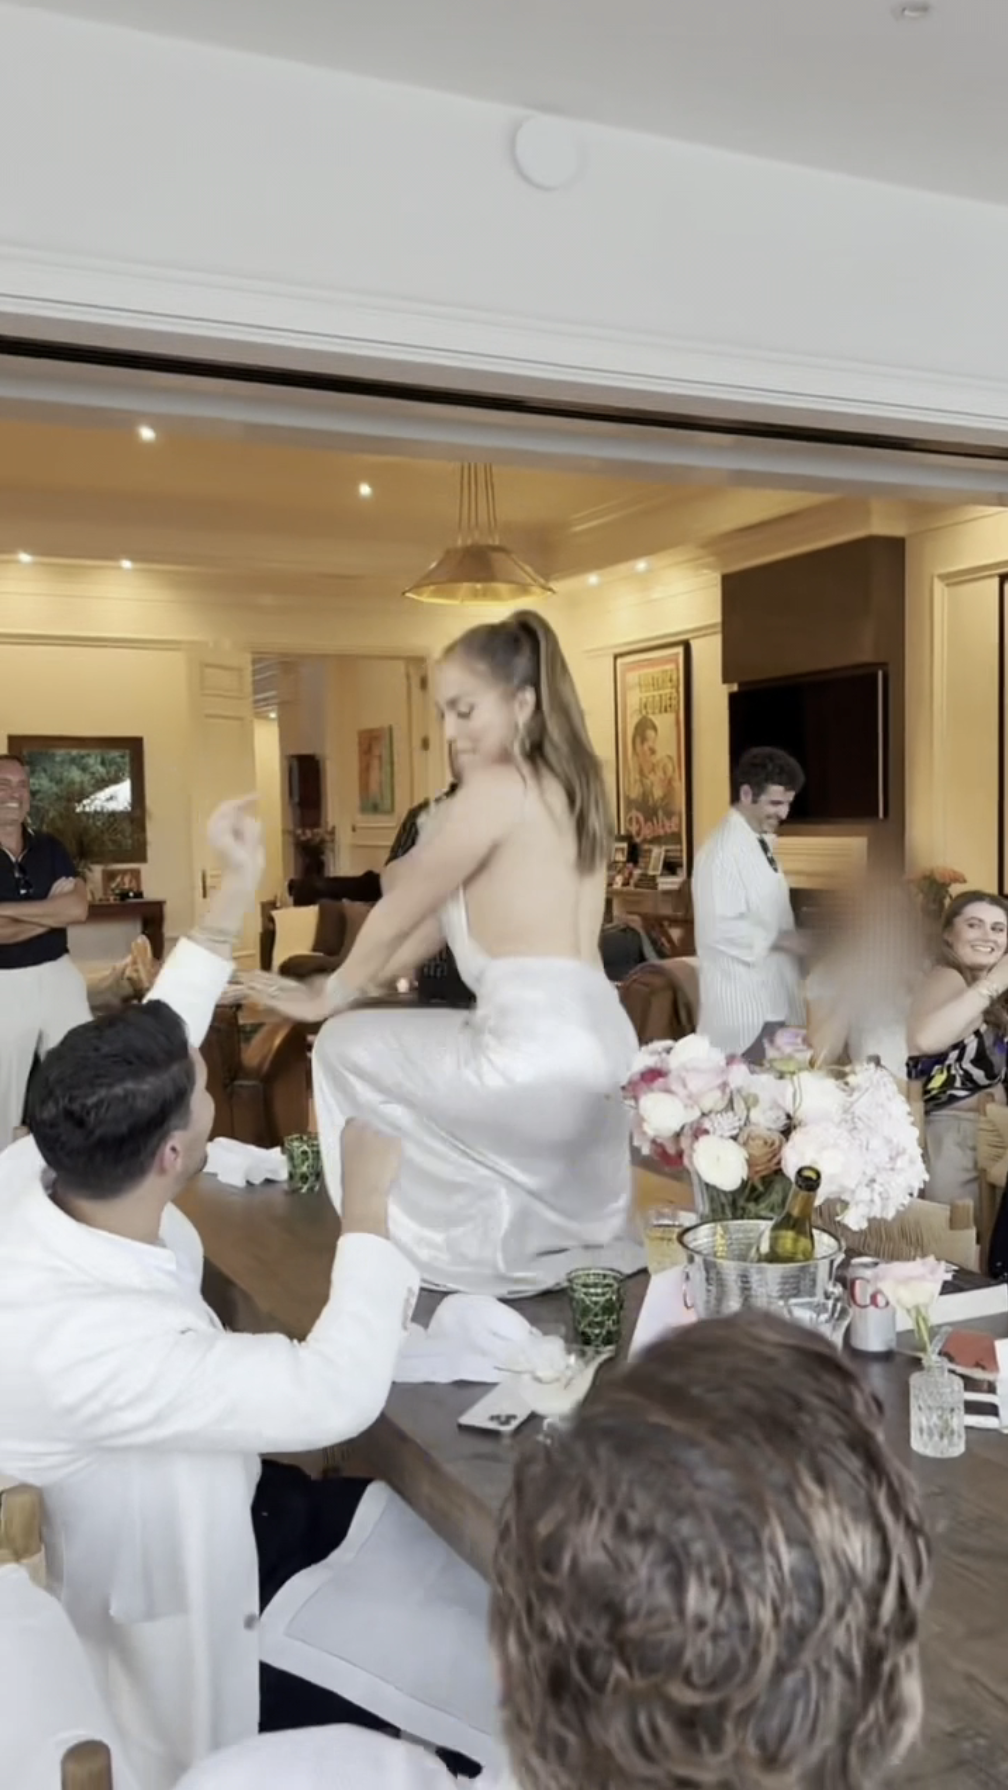 Jennifer Lopez dancing on a table